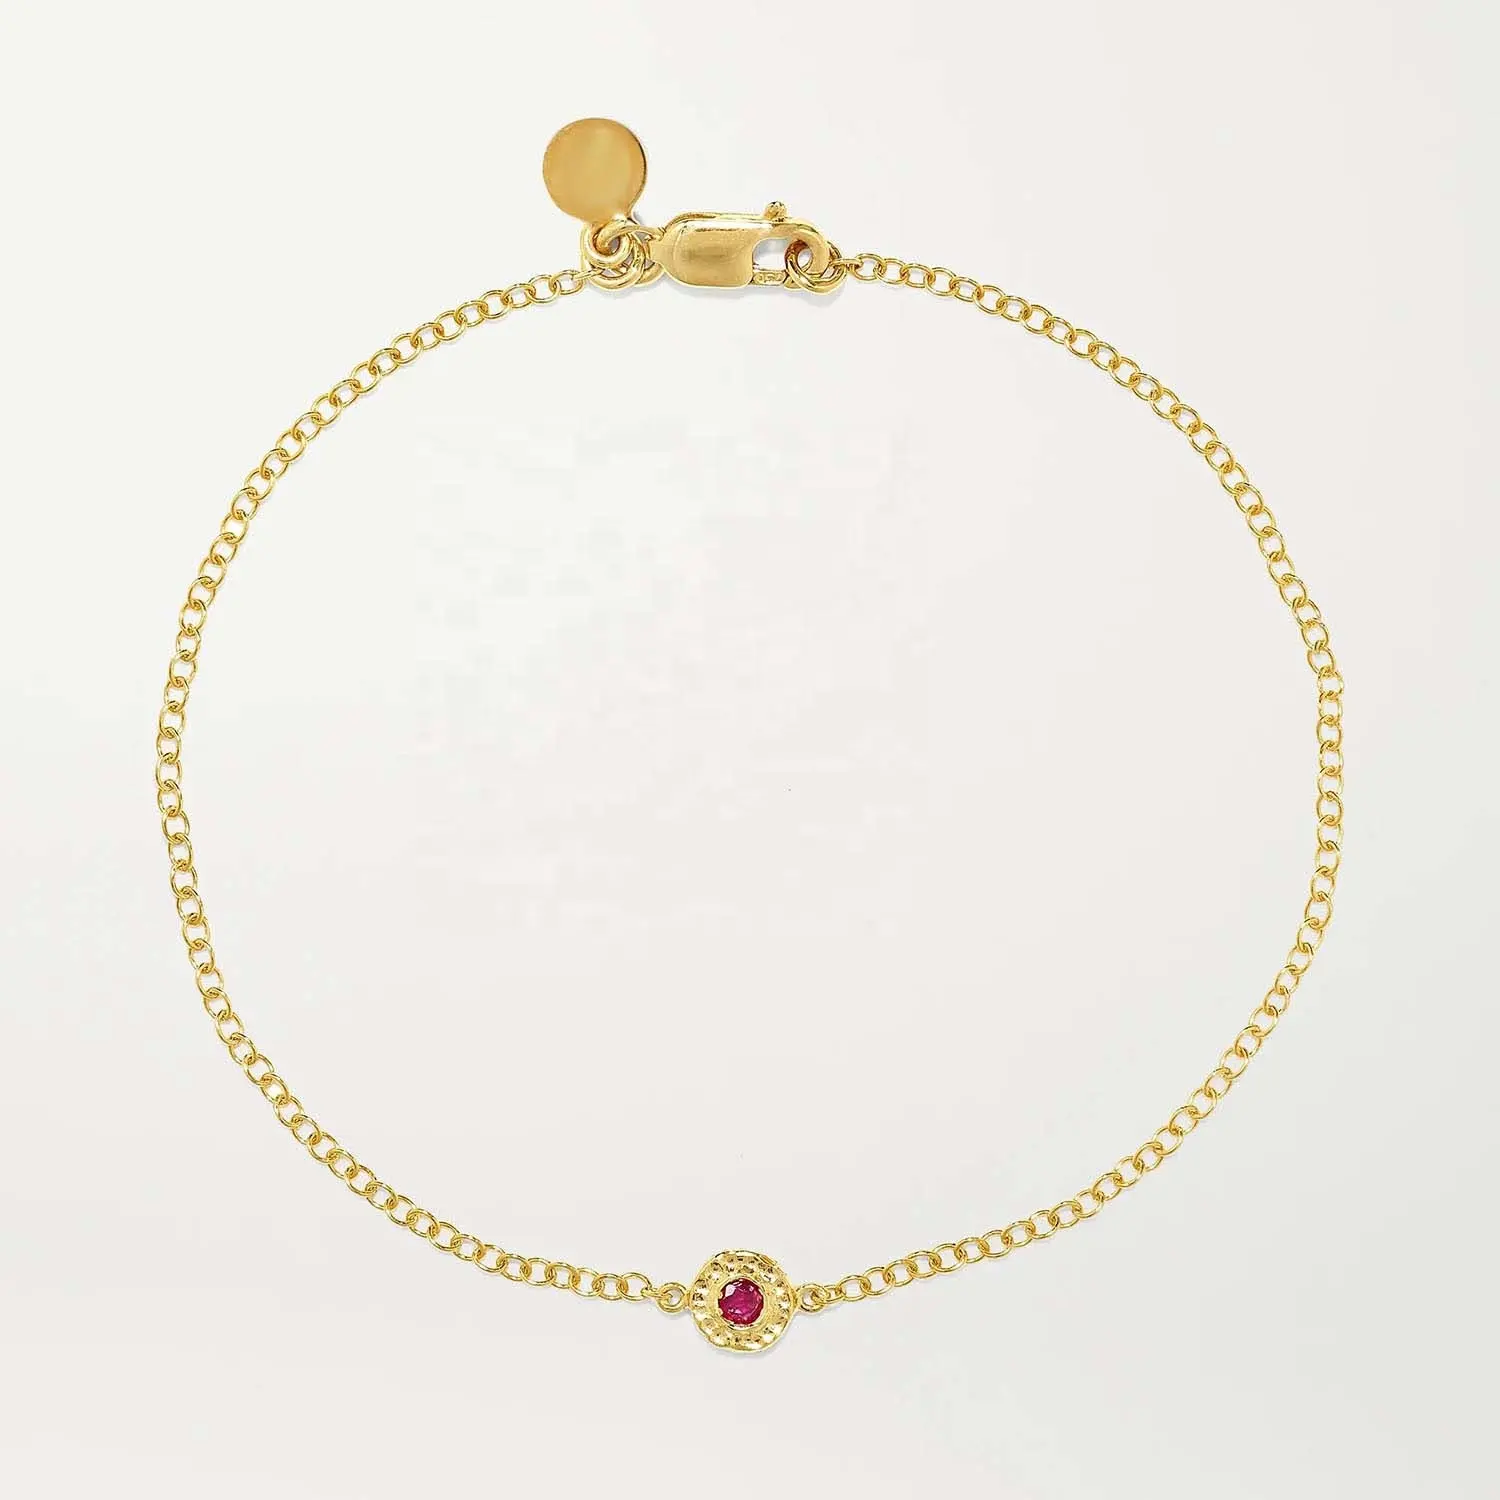 Wholesale Jewelry Delicate Gold CZ Charm Elegant Hammered Bracelet 925 Sterling Silver